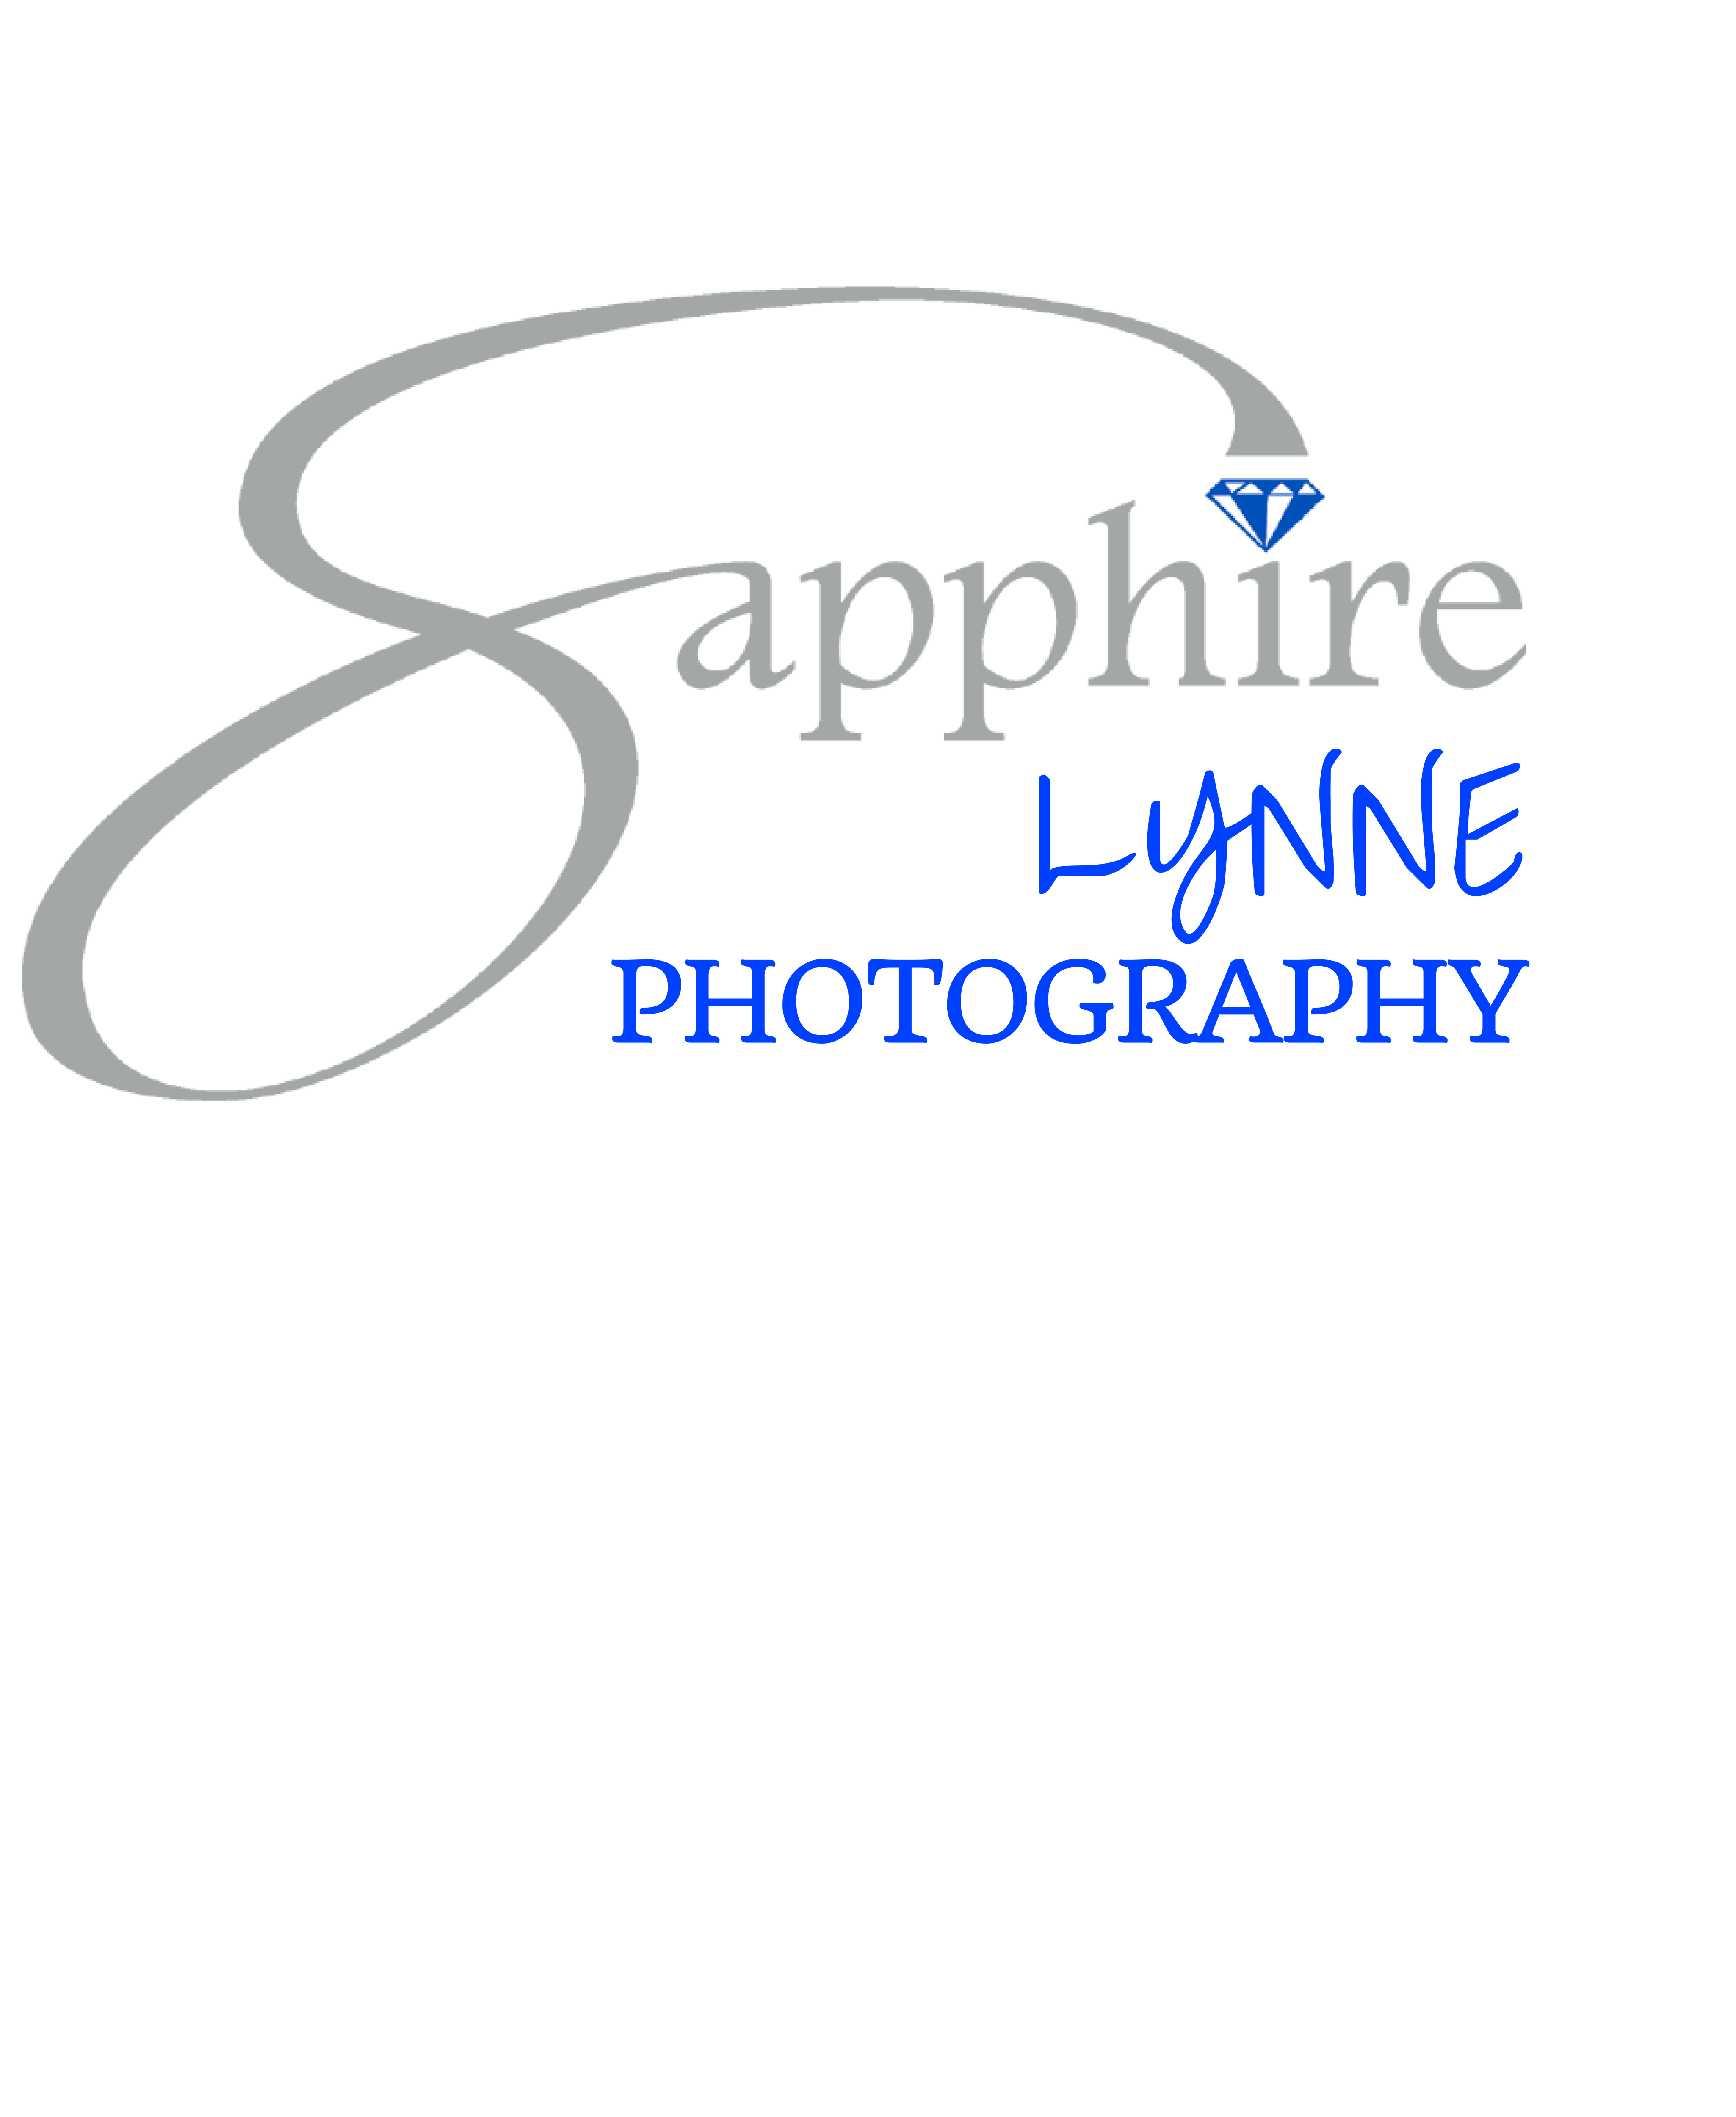 Sapphire Lynne Photography